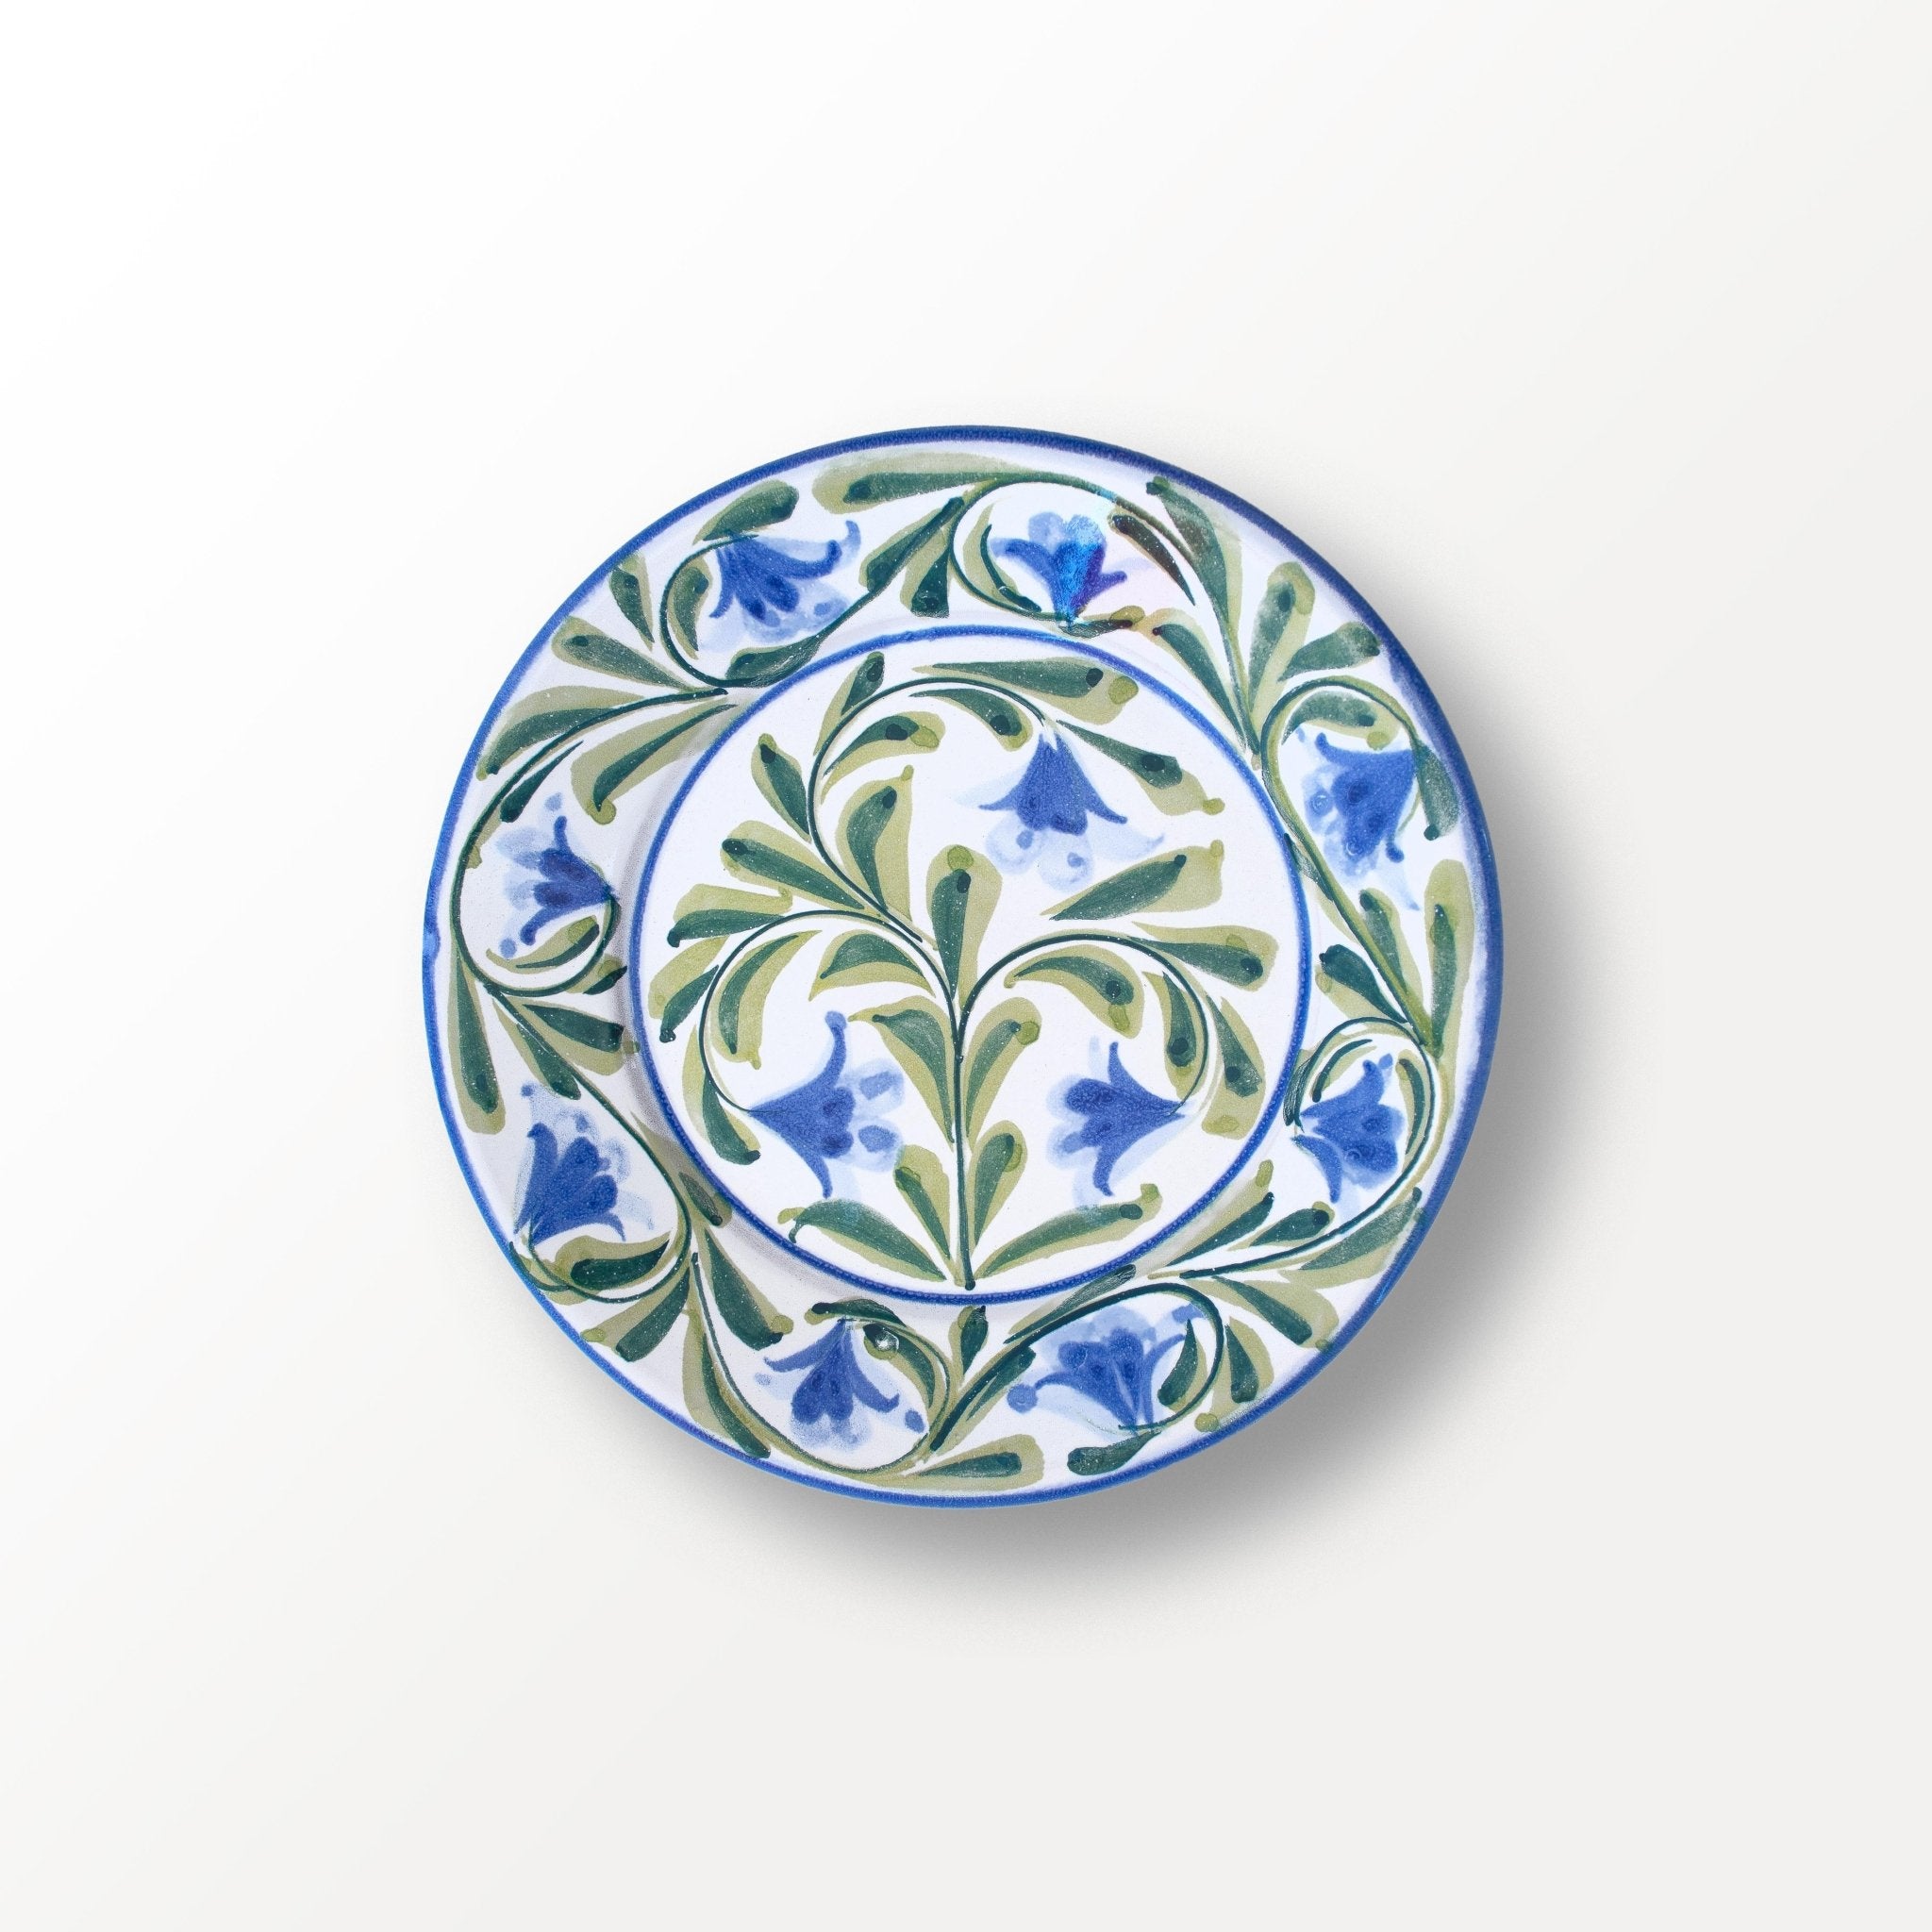 Small Plate - Lily Flower Blue & Green - De'Part